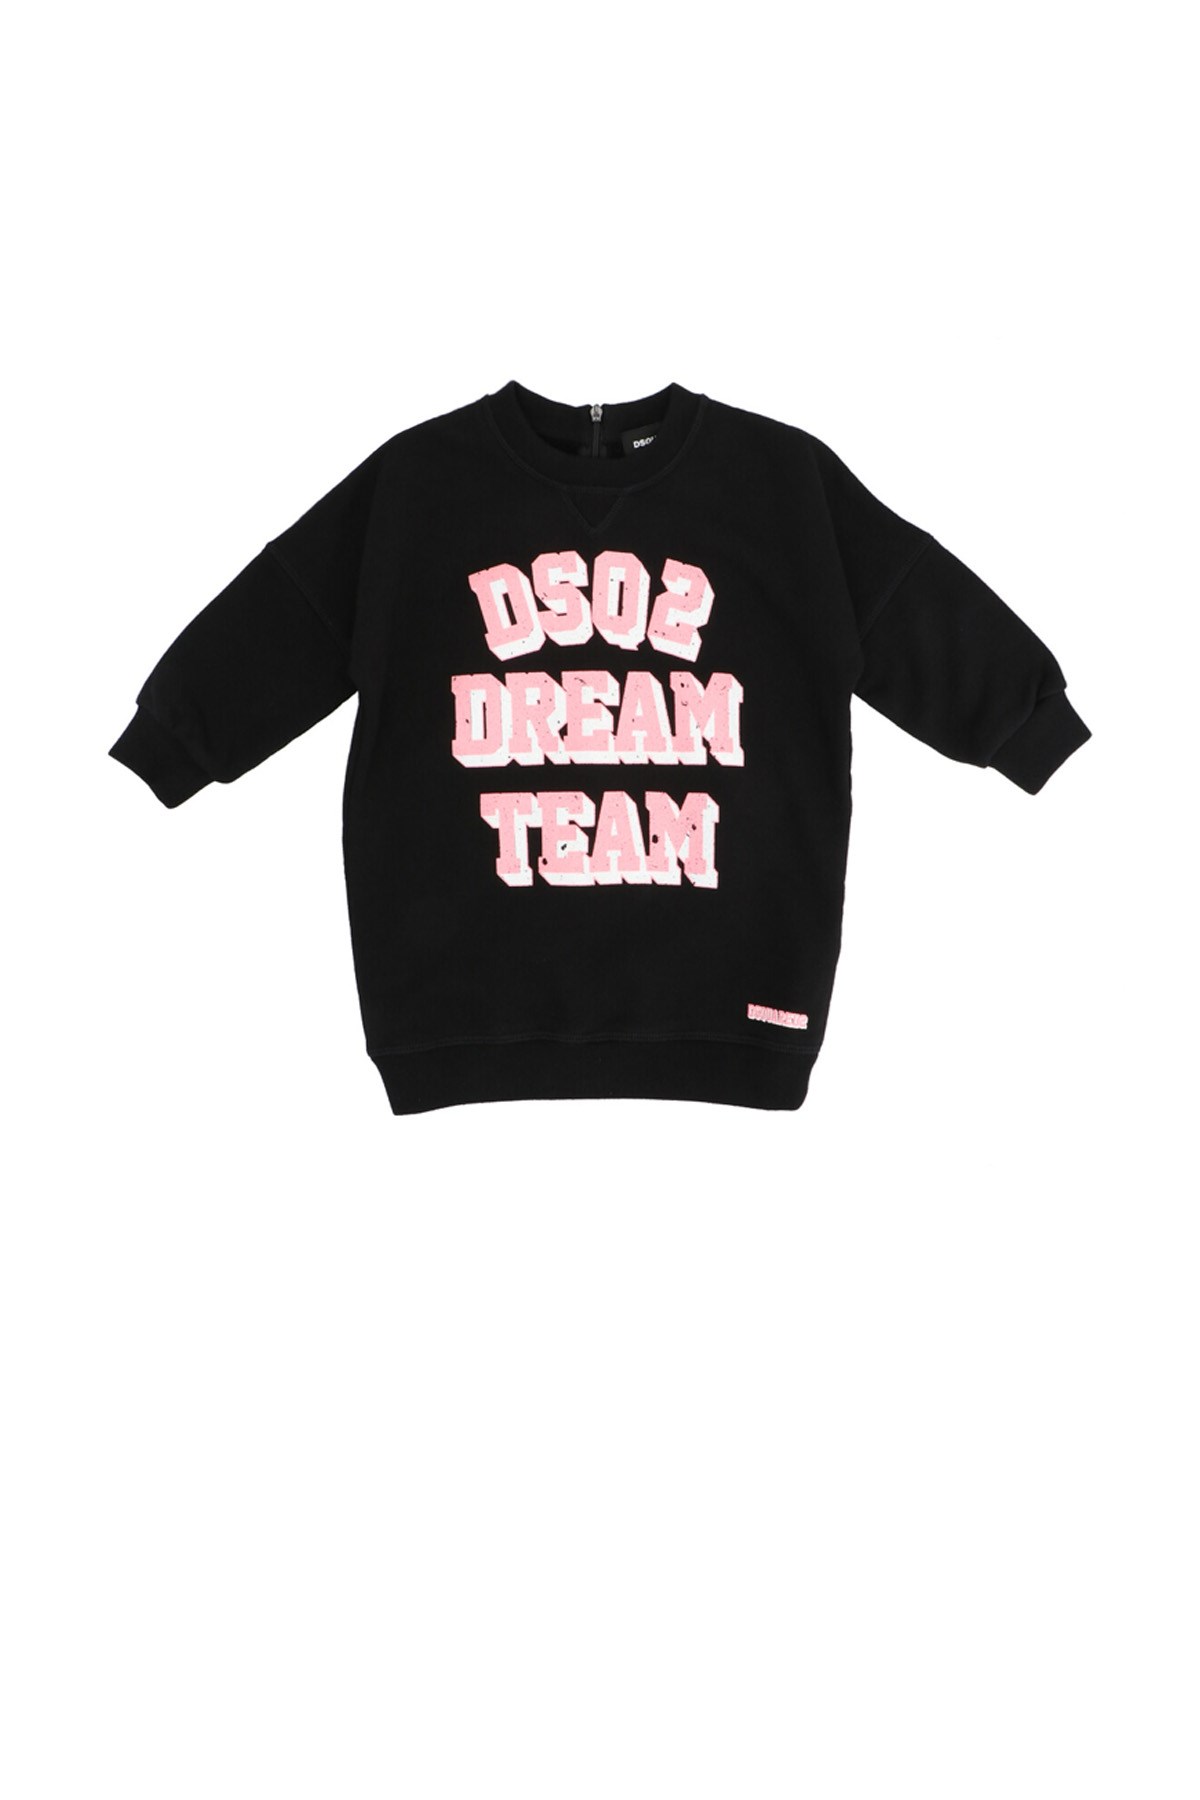 DSQUARED2 'Dream Team’ Dress